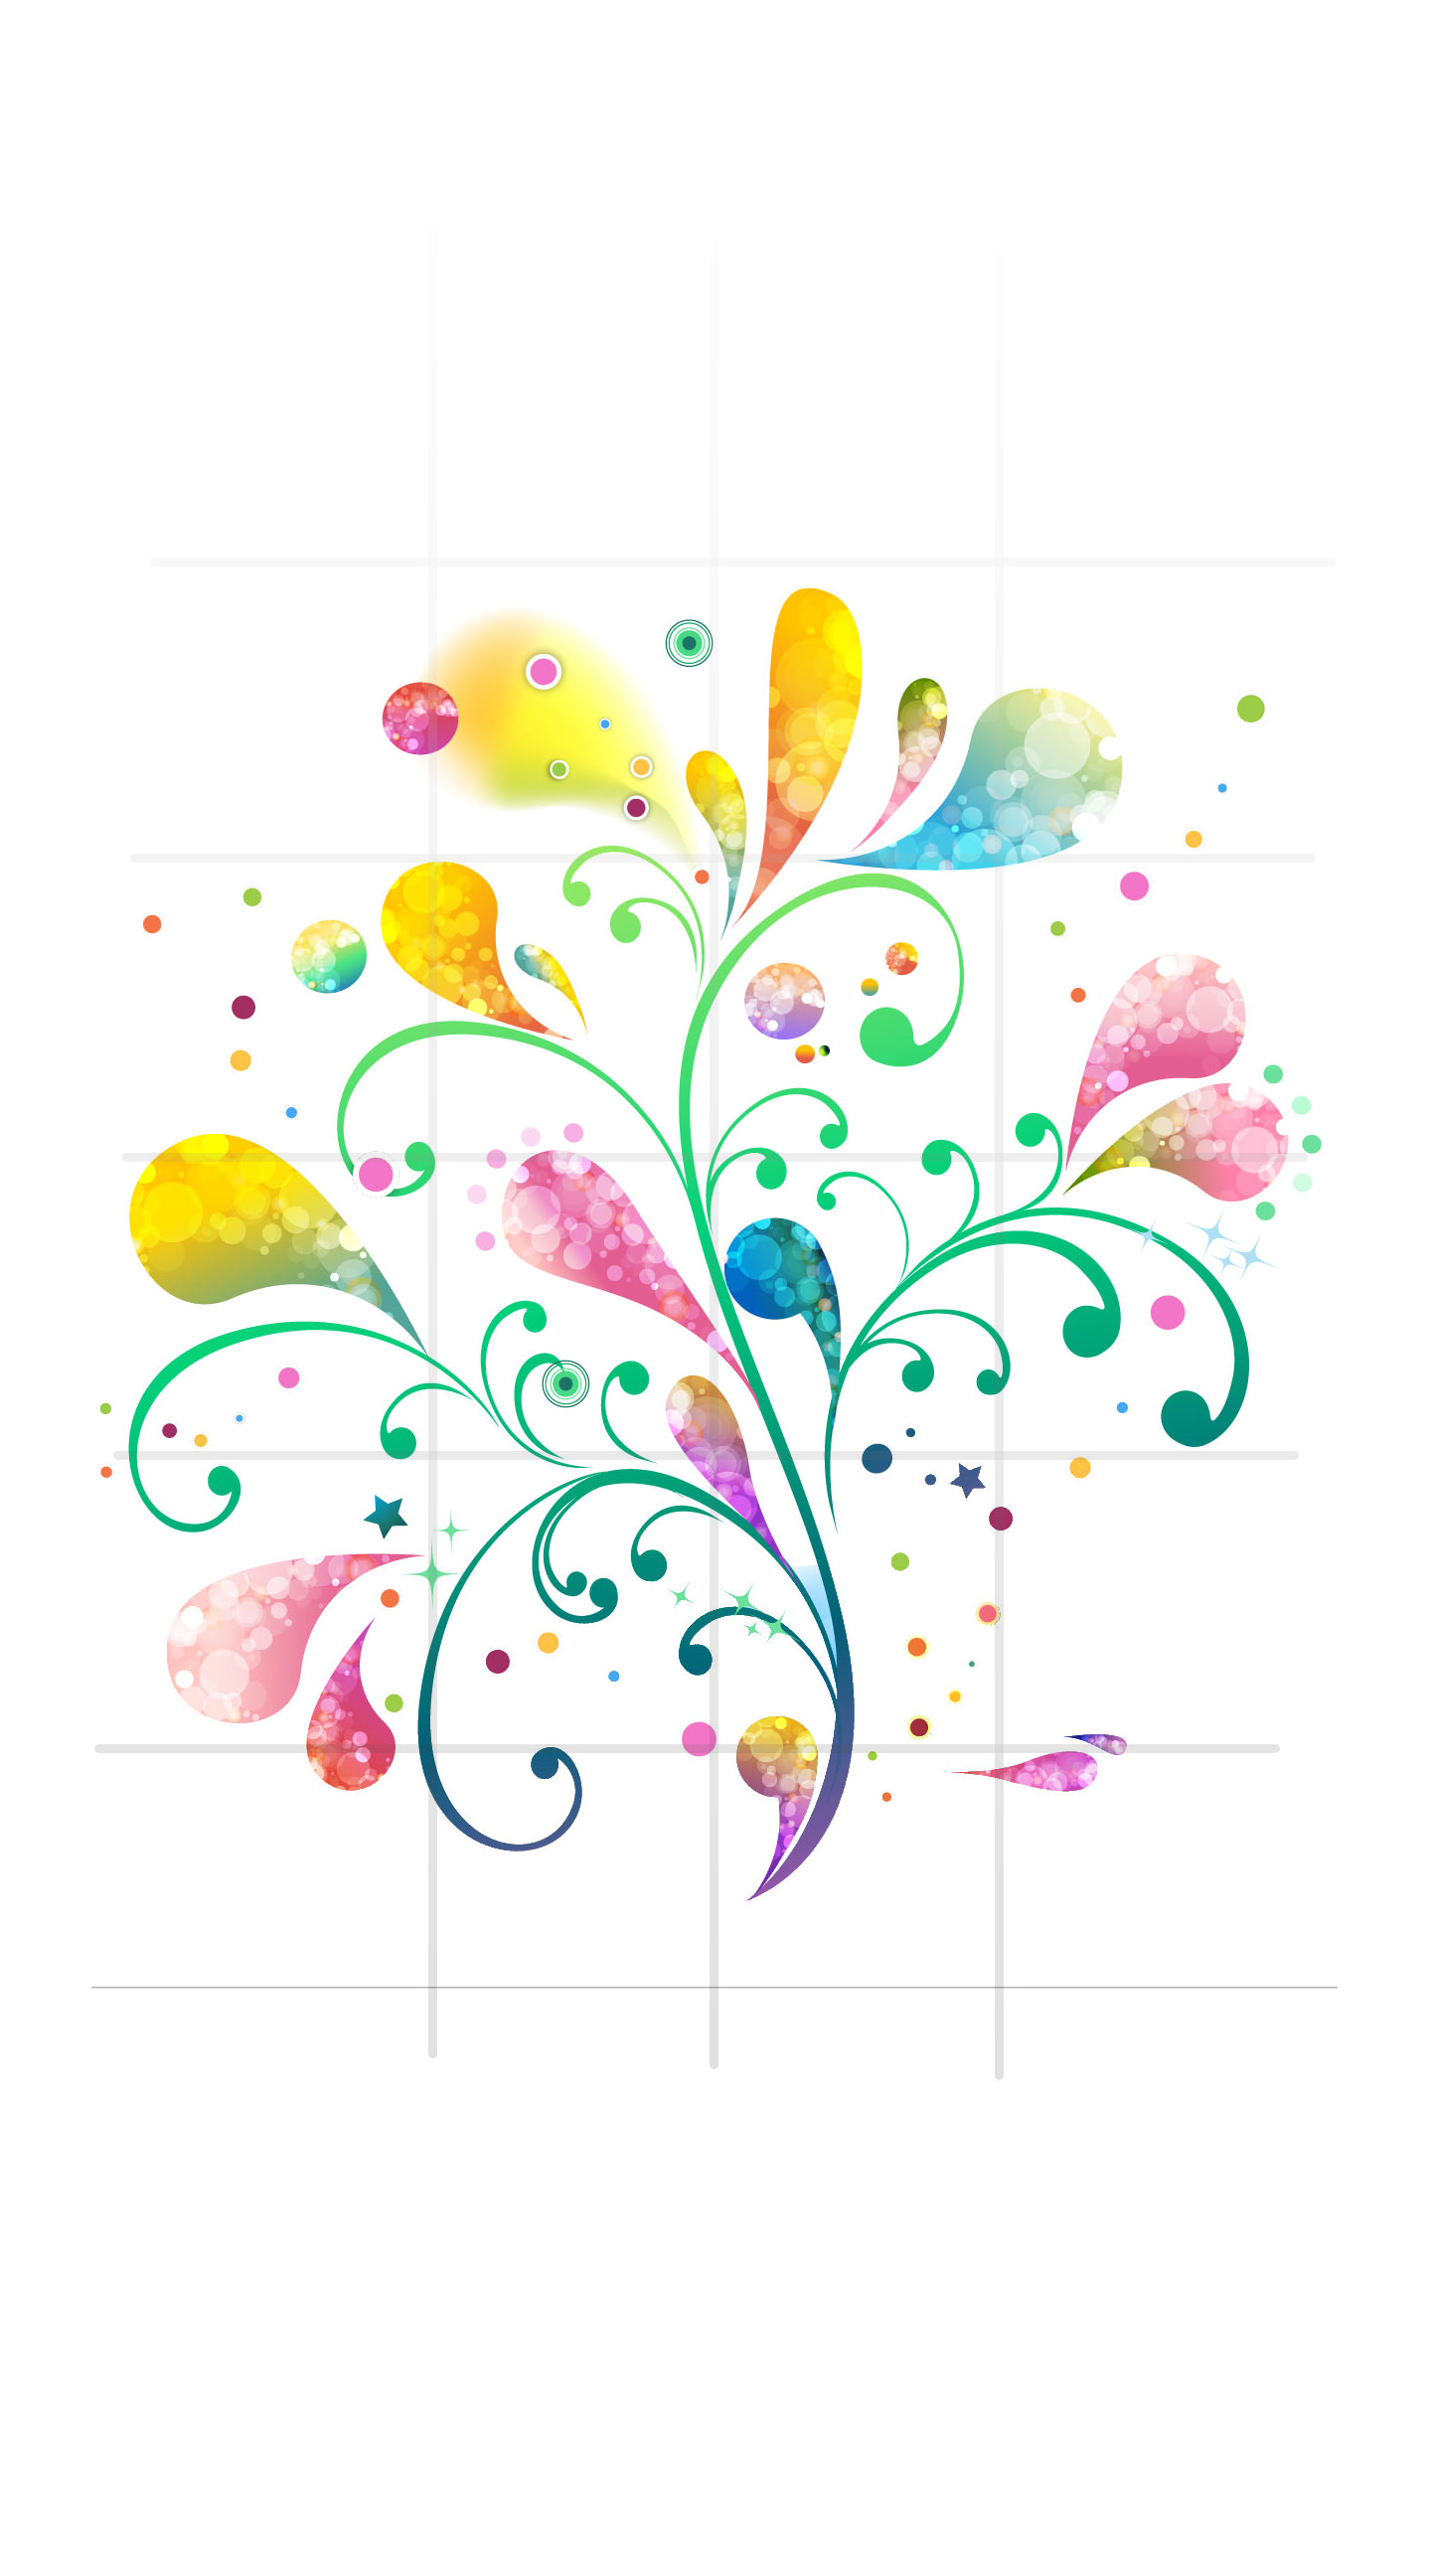 Pola gadis ilustrasi bunga dan wanita untuk rak berwarna-warni